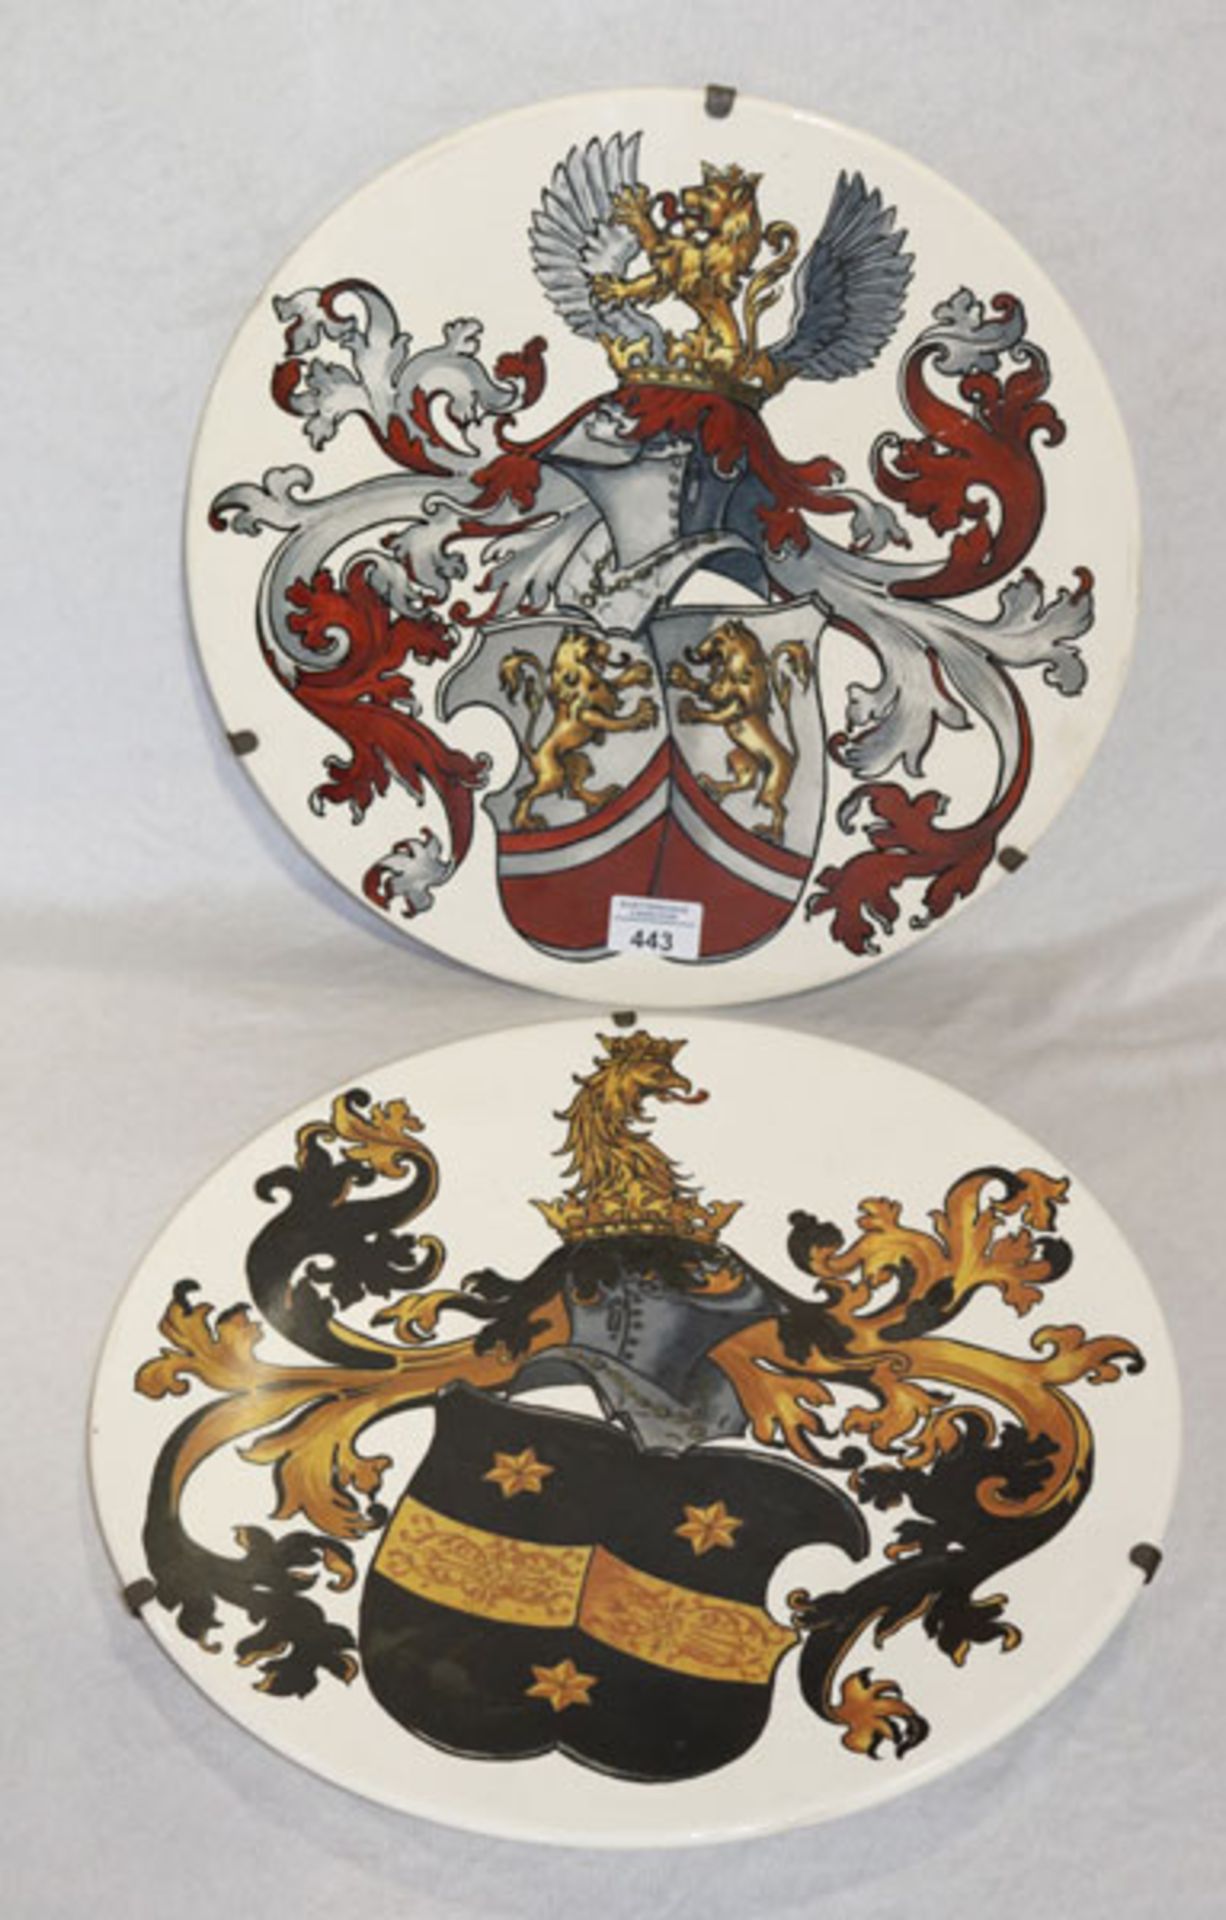 2 Keramik Wandteller mit Wappendekor, rückseitig monogrammiert FM 1904, D 37,5 cm